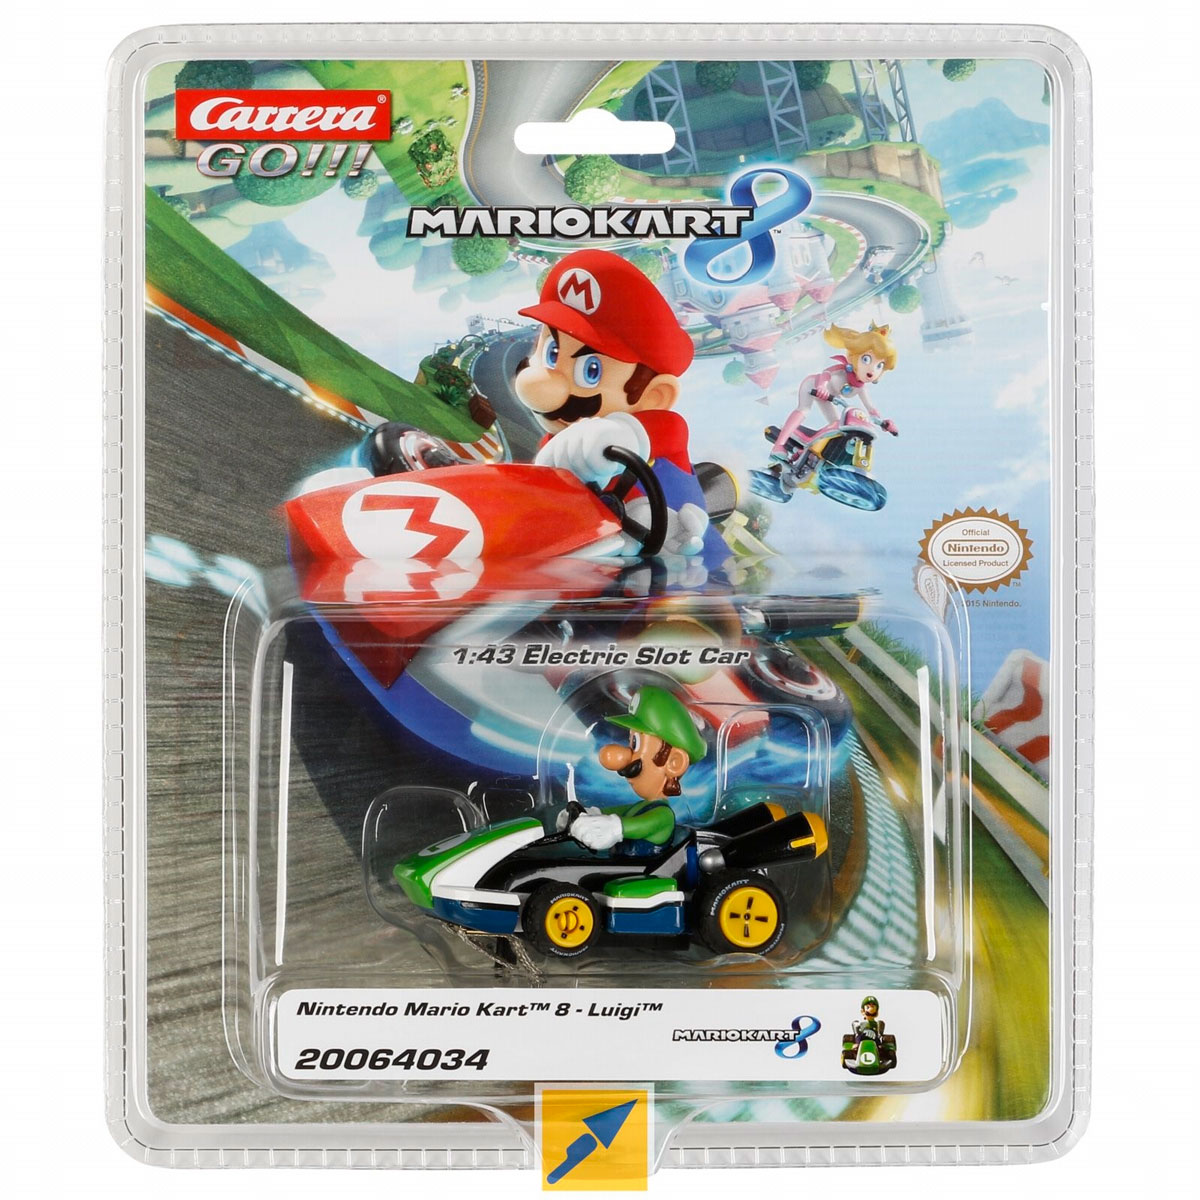 Nintendo mario kart - circuit carrera go p-wing, vehicules-garages